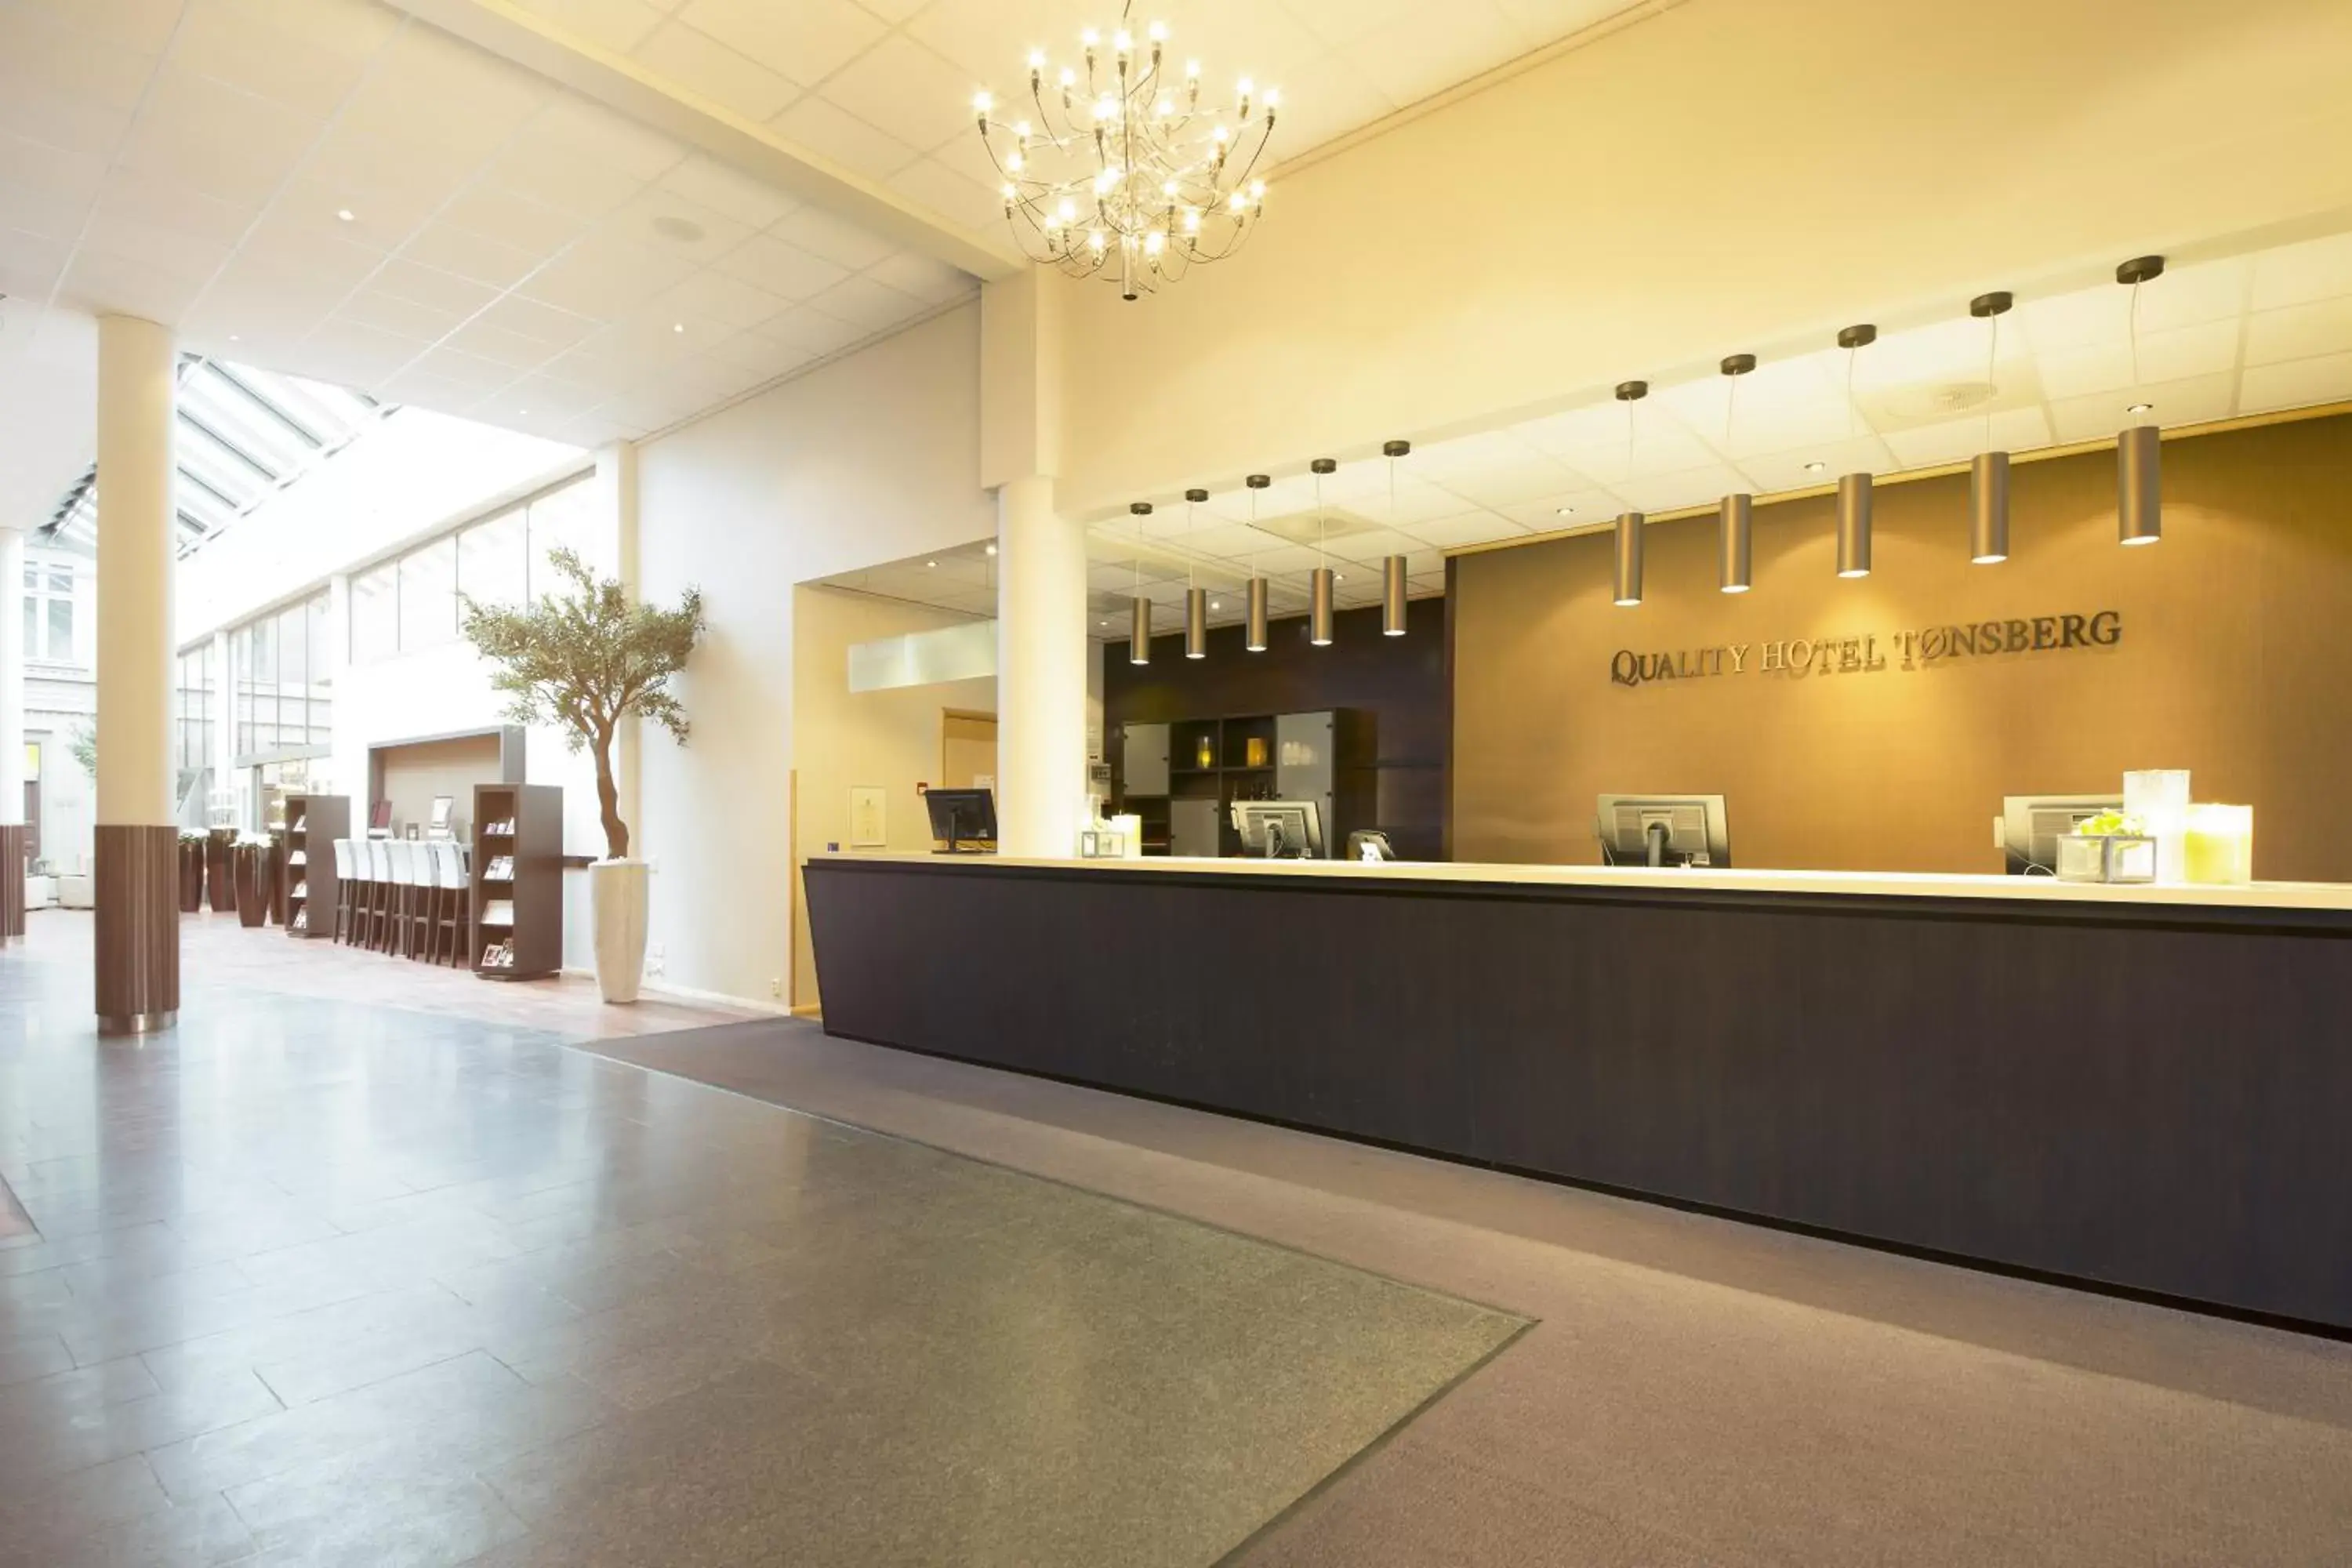 Lobby or reception, Lobby/Reception in Quality Hotel Tønsberg